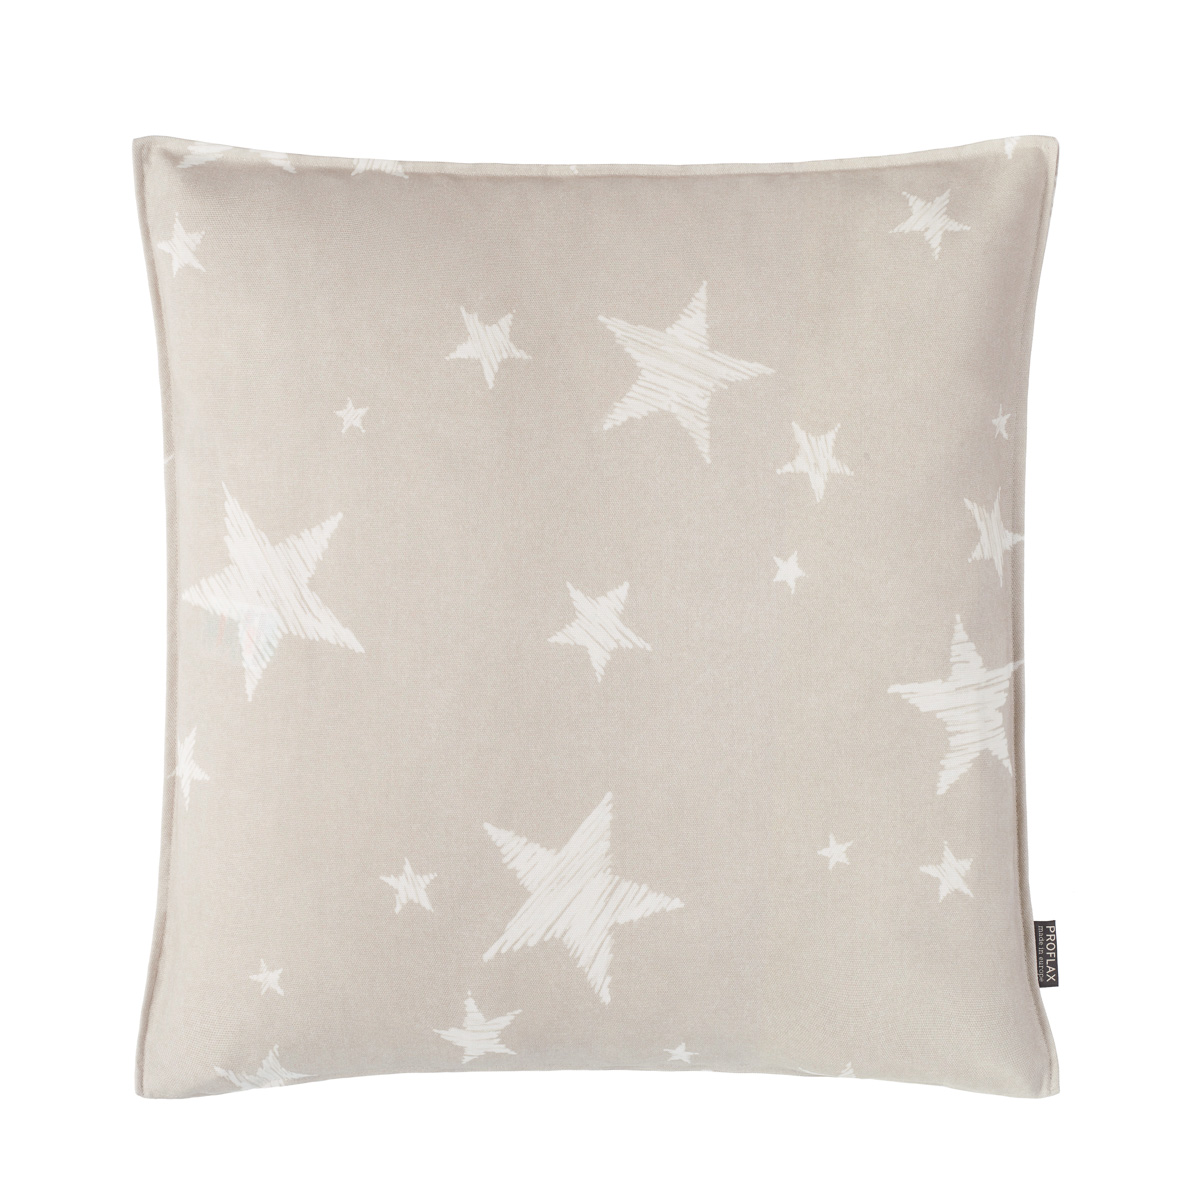 PROFLAX Kissenhülle hellgrau mit weißen Sterne 50 x 50 cm